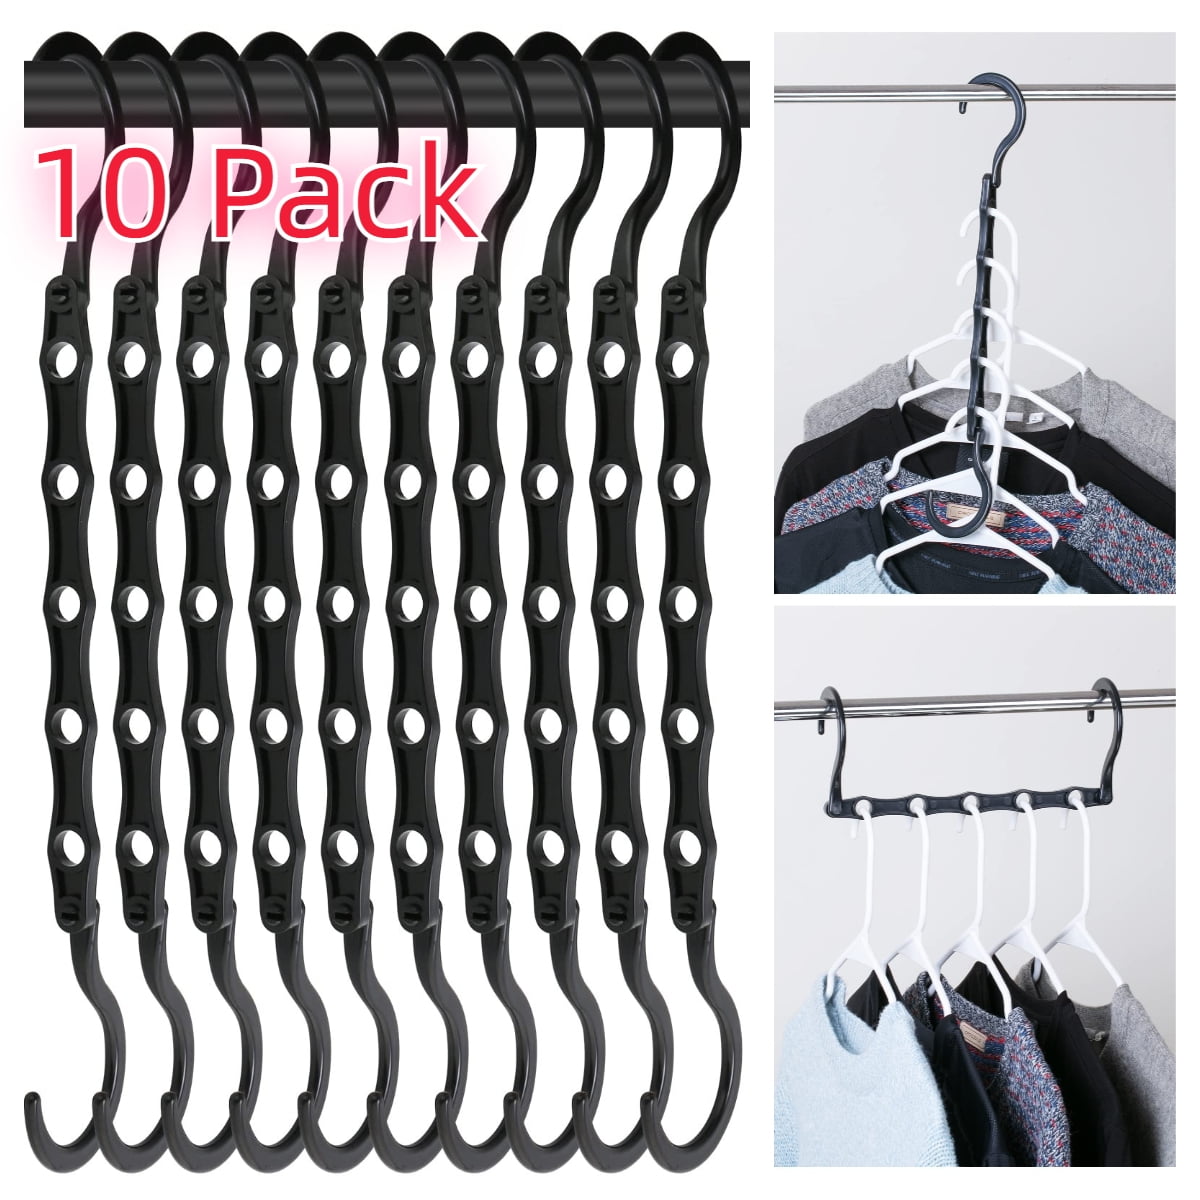  BHcorner Black Space Saving Hangers for Clothes,10